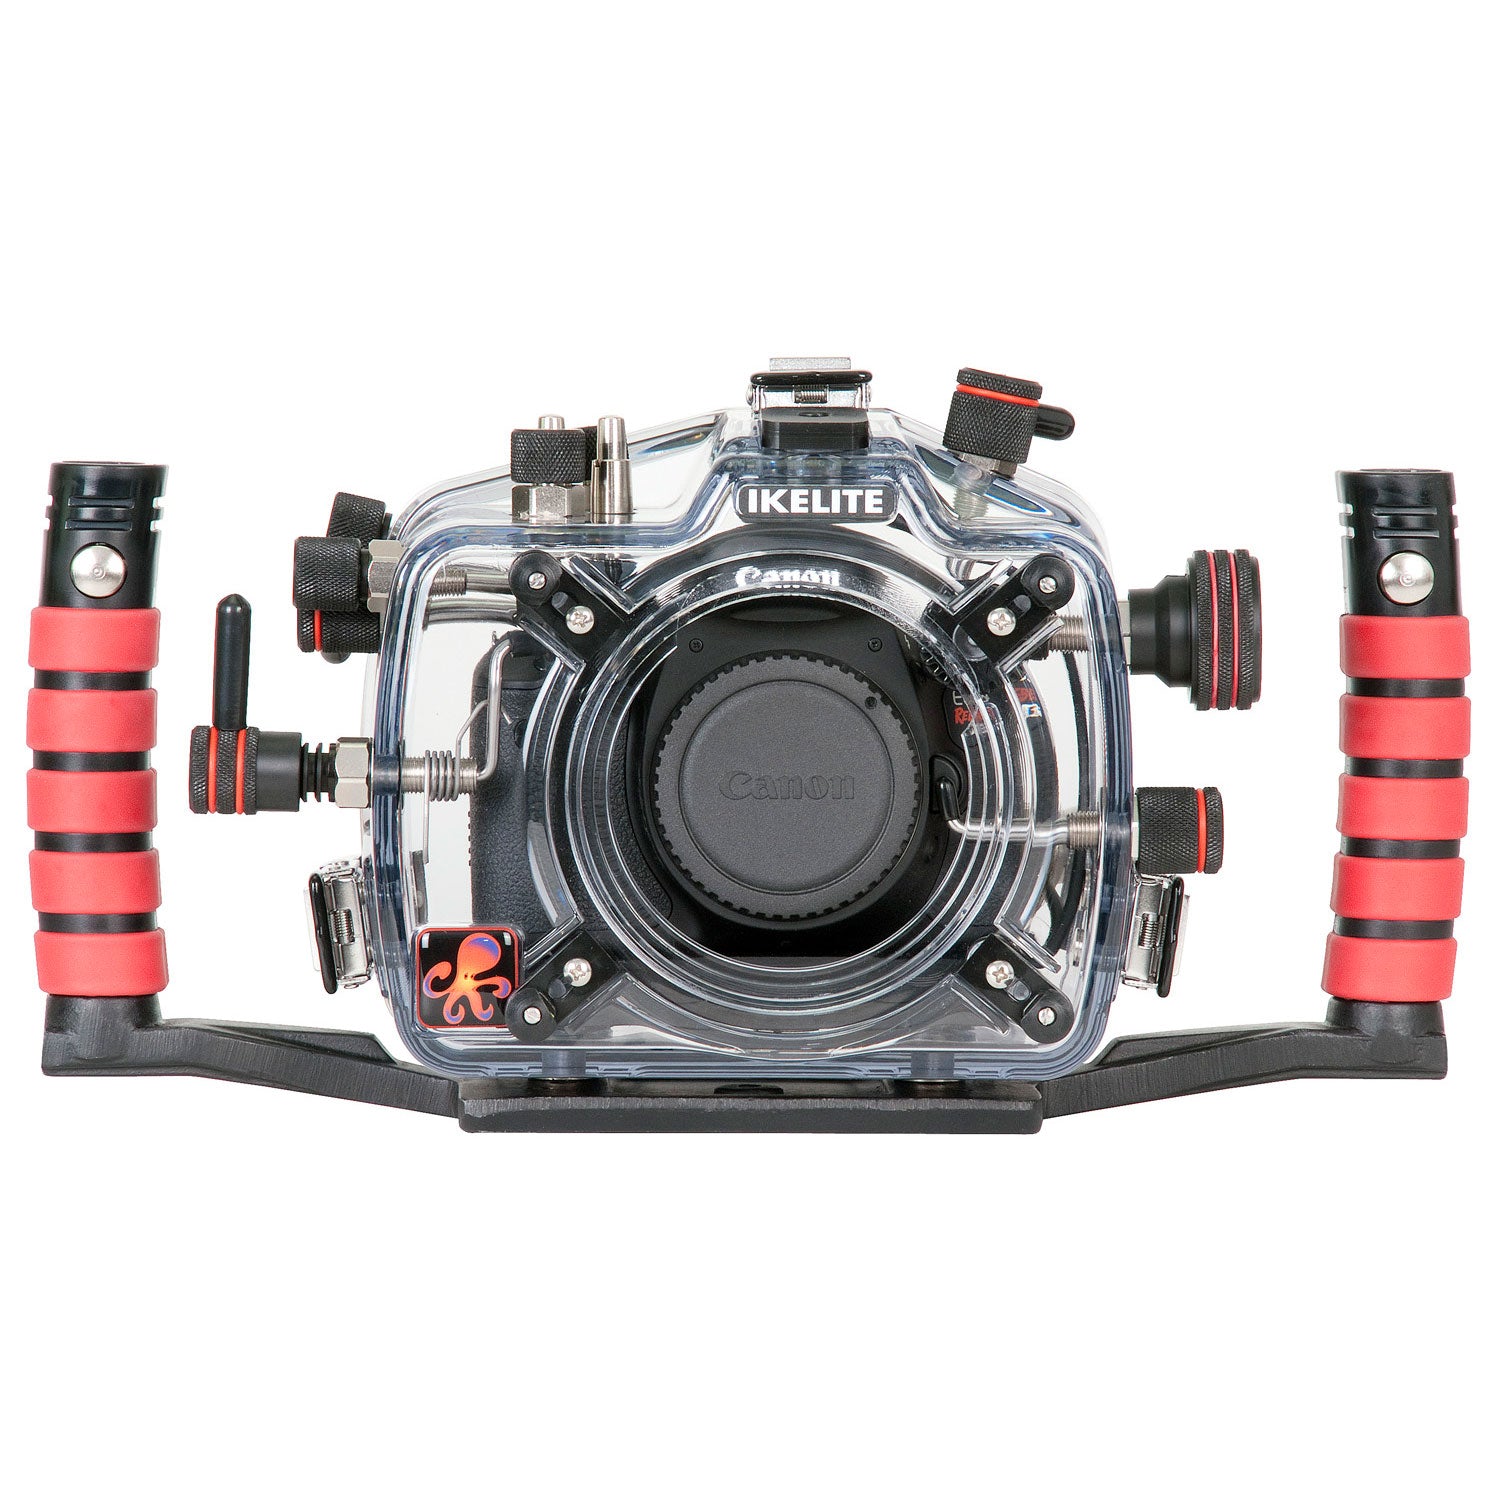 200FL Underwater TTL Housing for Canon EOS 600D Rebel T3i (Kiss X5) DSLR Cameras